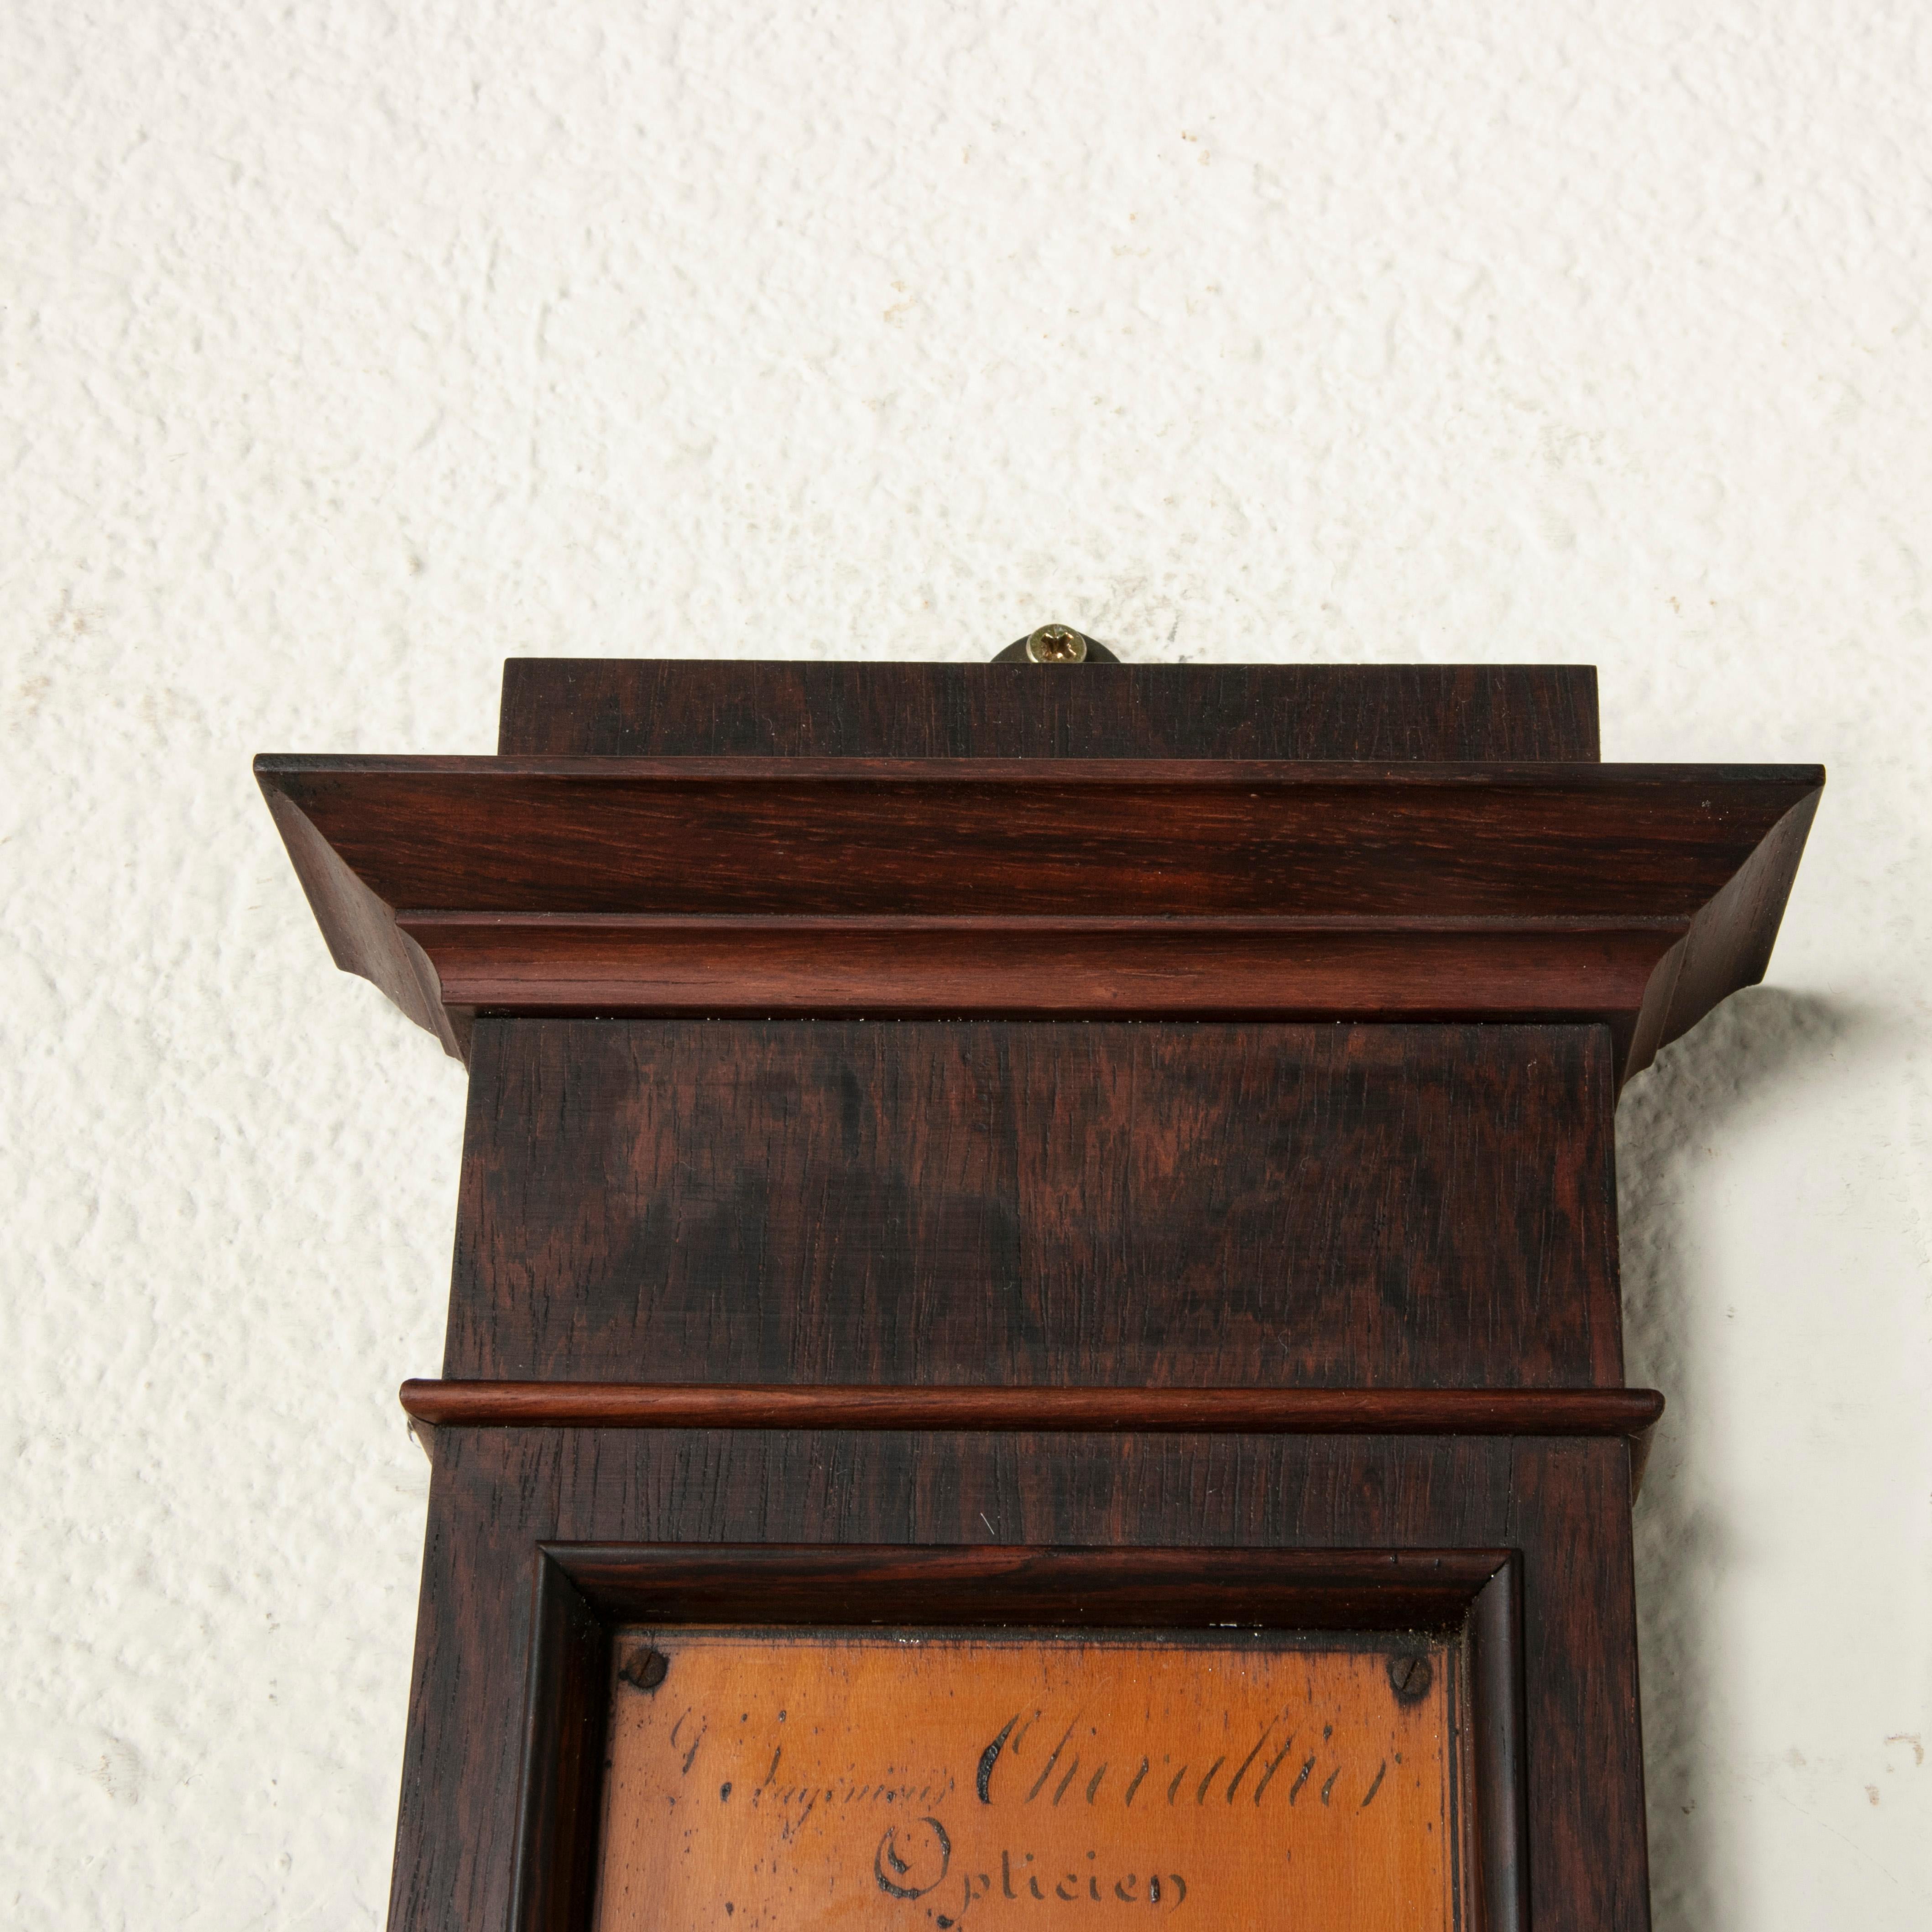 Bronze 19th Century French Mahogany and Lemon Wood Barometer, Signed Chevallier